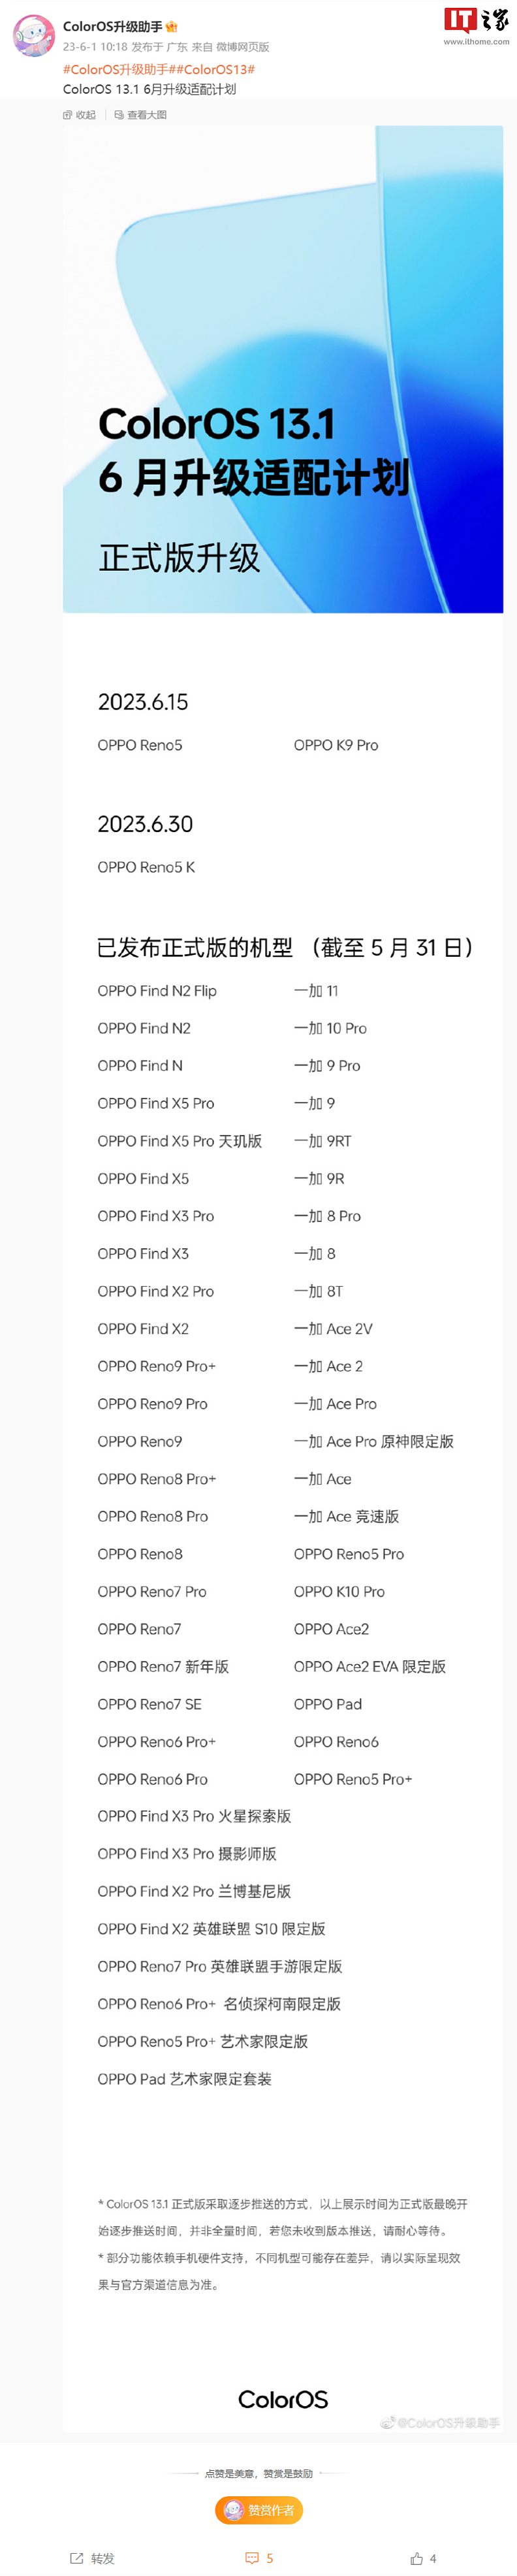 ColorOS 13.1 系统 6 月升级适配计划公布：正式版支持 OPPO Reno5 等三款机型 - 1